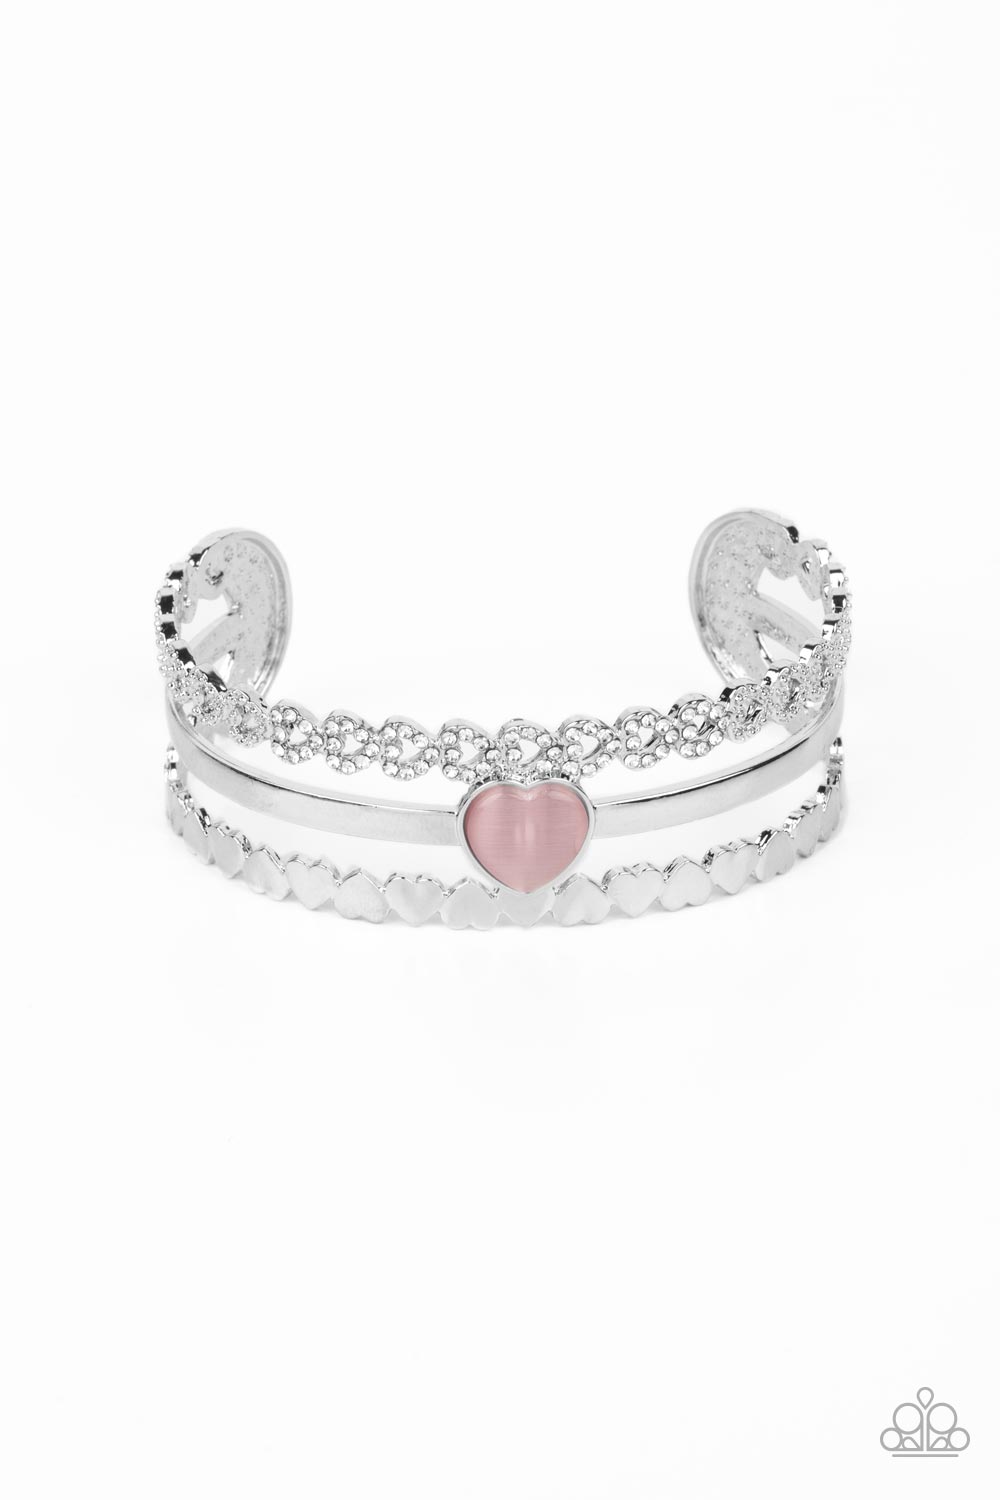 You Win My Heart - pink - Paparazzi bracelet